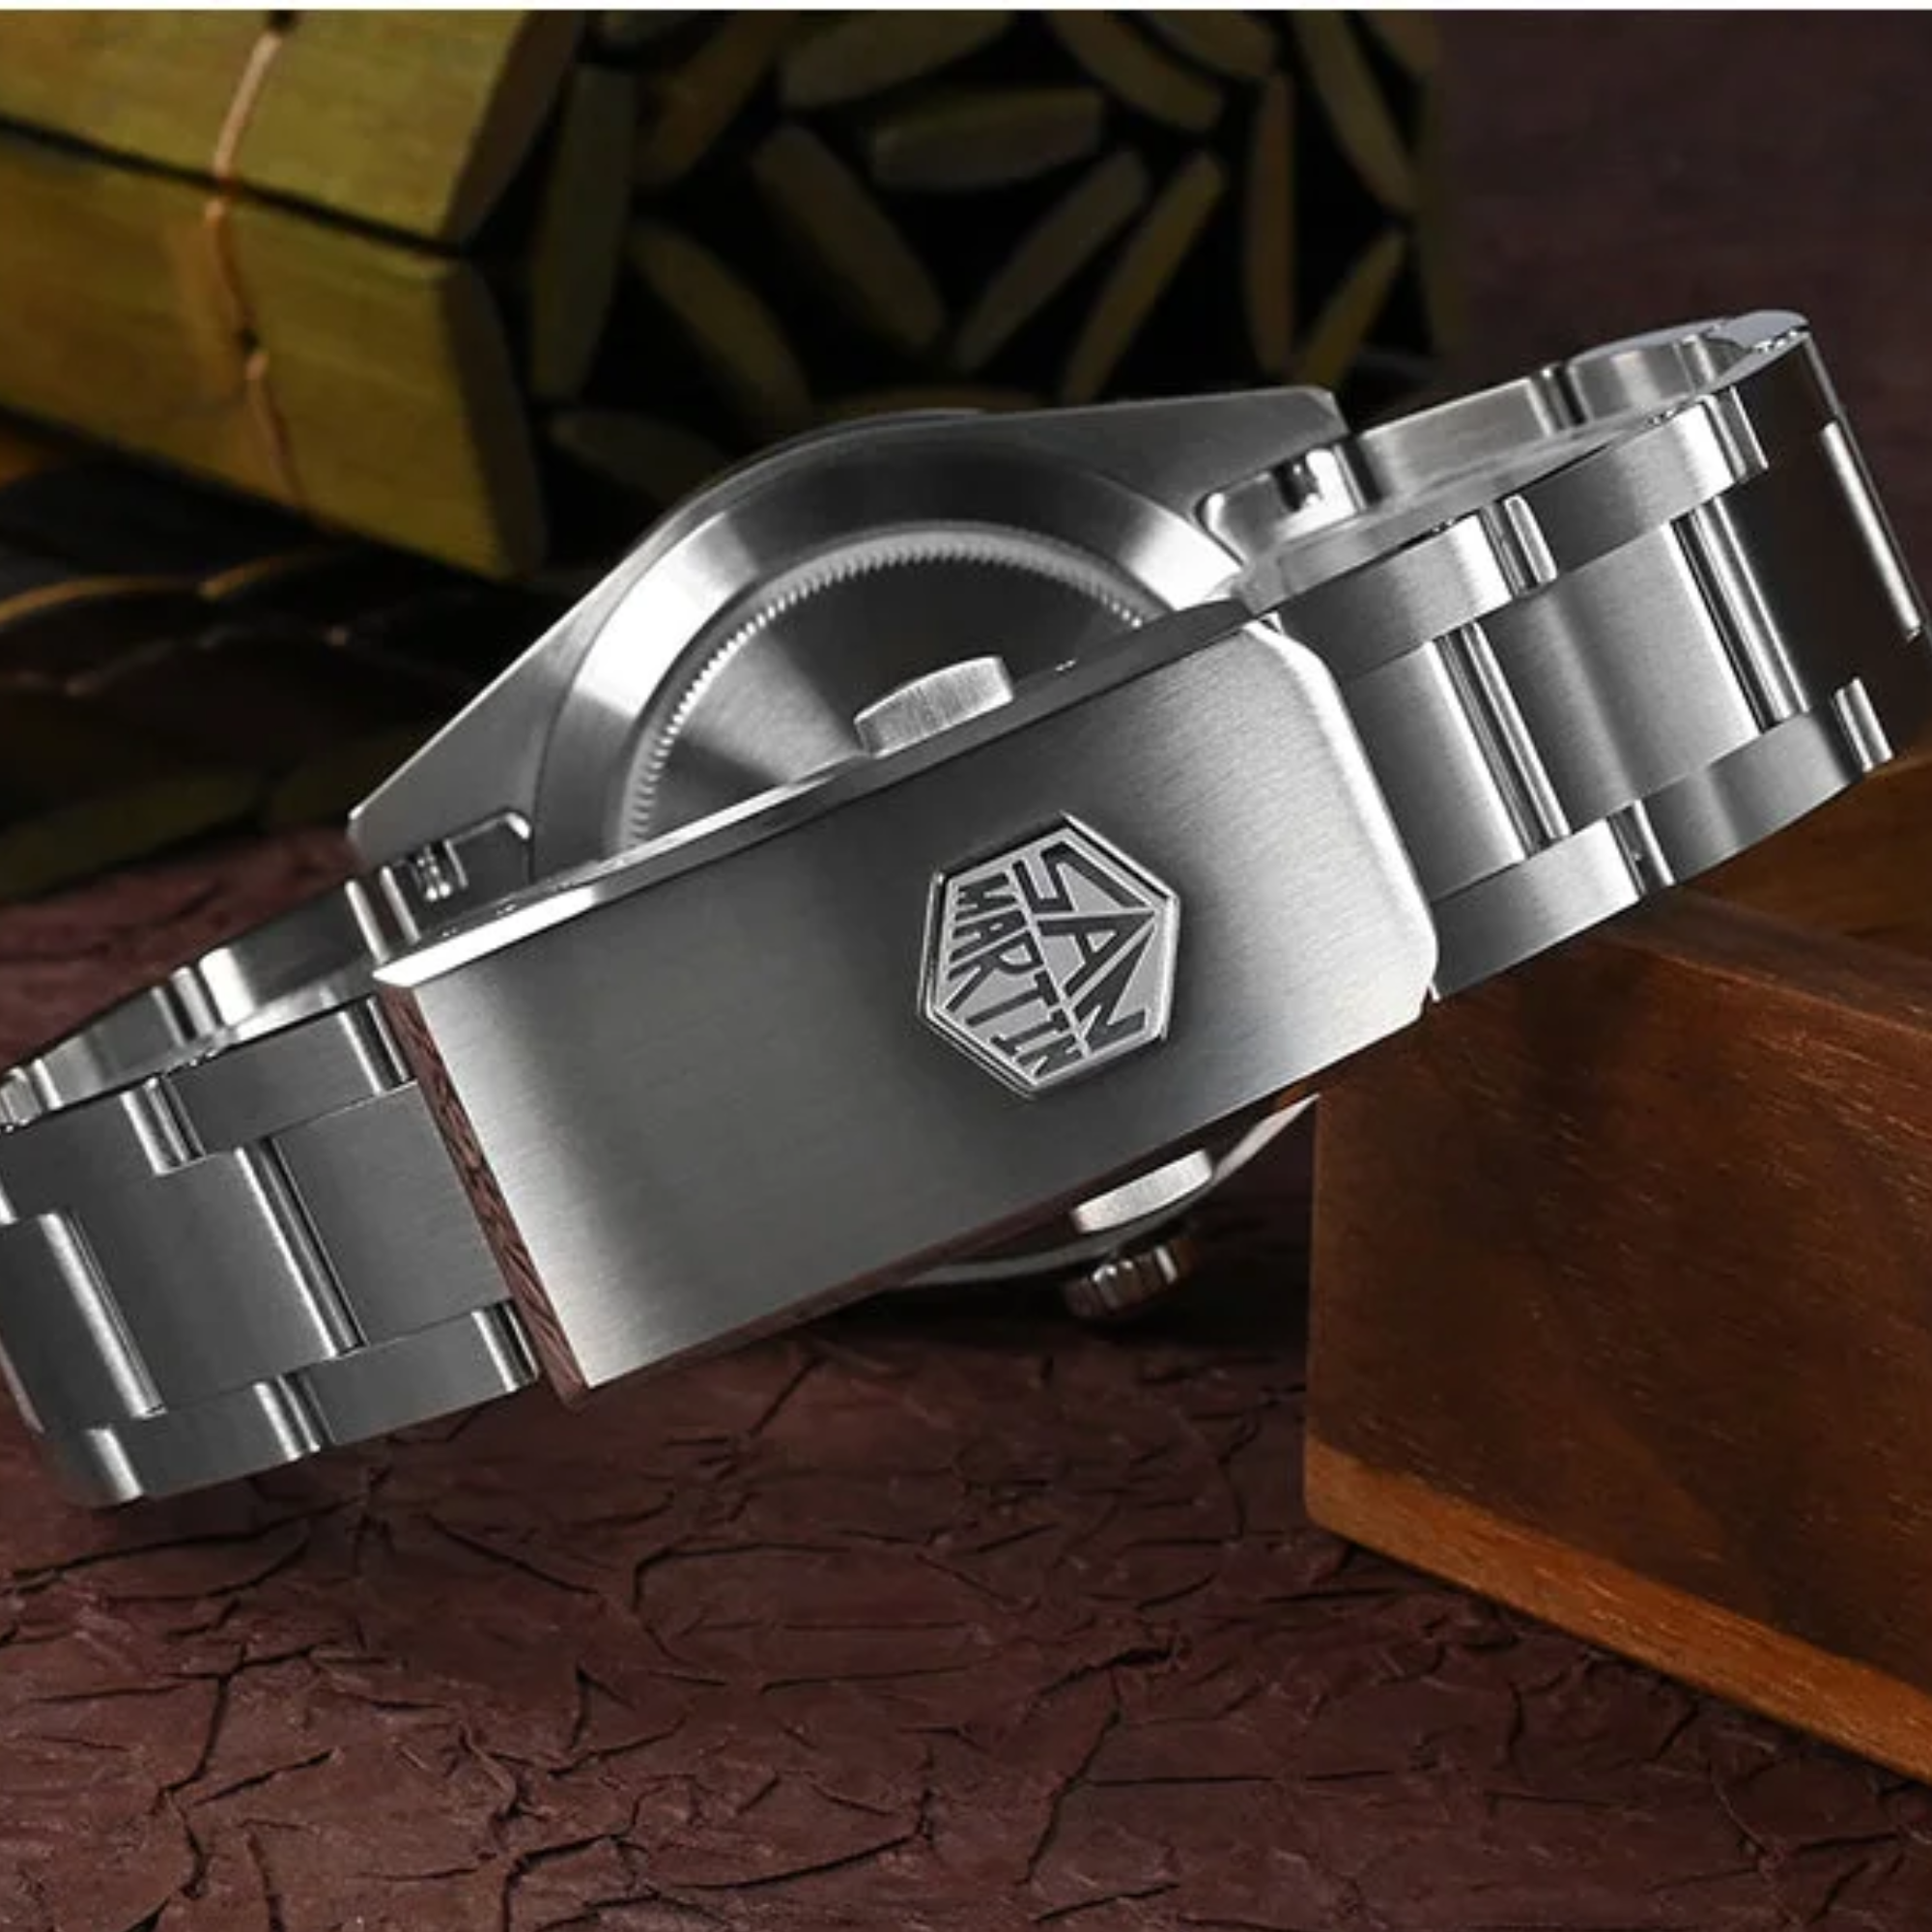 San Martin NH34 39mm BB GMT Watch SN0054GB - Black Dial san martin watches india online